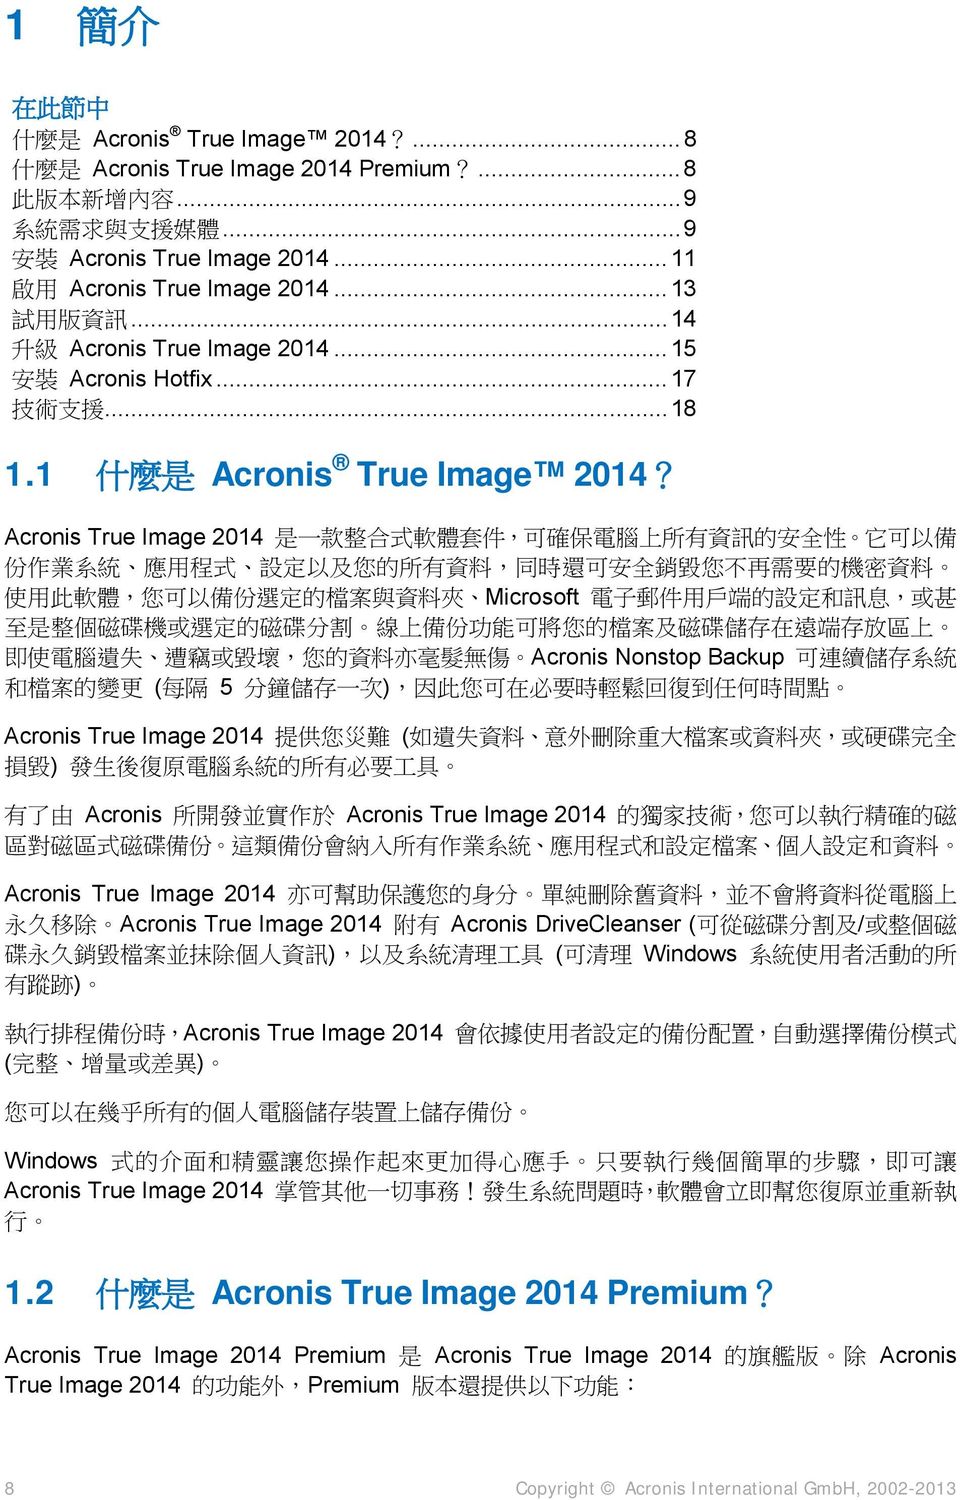 Acronis True Image 2014 是 一 款 整 合 式 軟 體 套 件, 可 確 保 電 腦 上 所 有 資 訊 的 安 全 性 它 可 以 備 份 作 業 系 統 應 用 程 式 設 定 以 及 您 的 所 有 資 料, 同 時 還 可 安 全 銷 毀 您 不 再 需 要 的 機 密 資 料 使 用 此 軟 體, 您 可 以 備 份 選 定 的 檔 案 與 資 料 夾